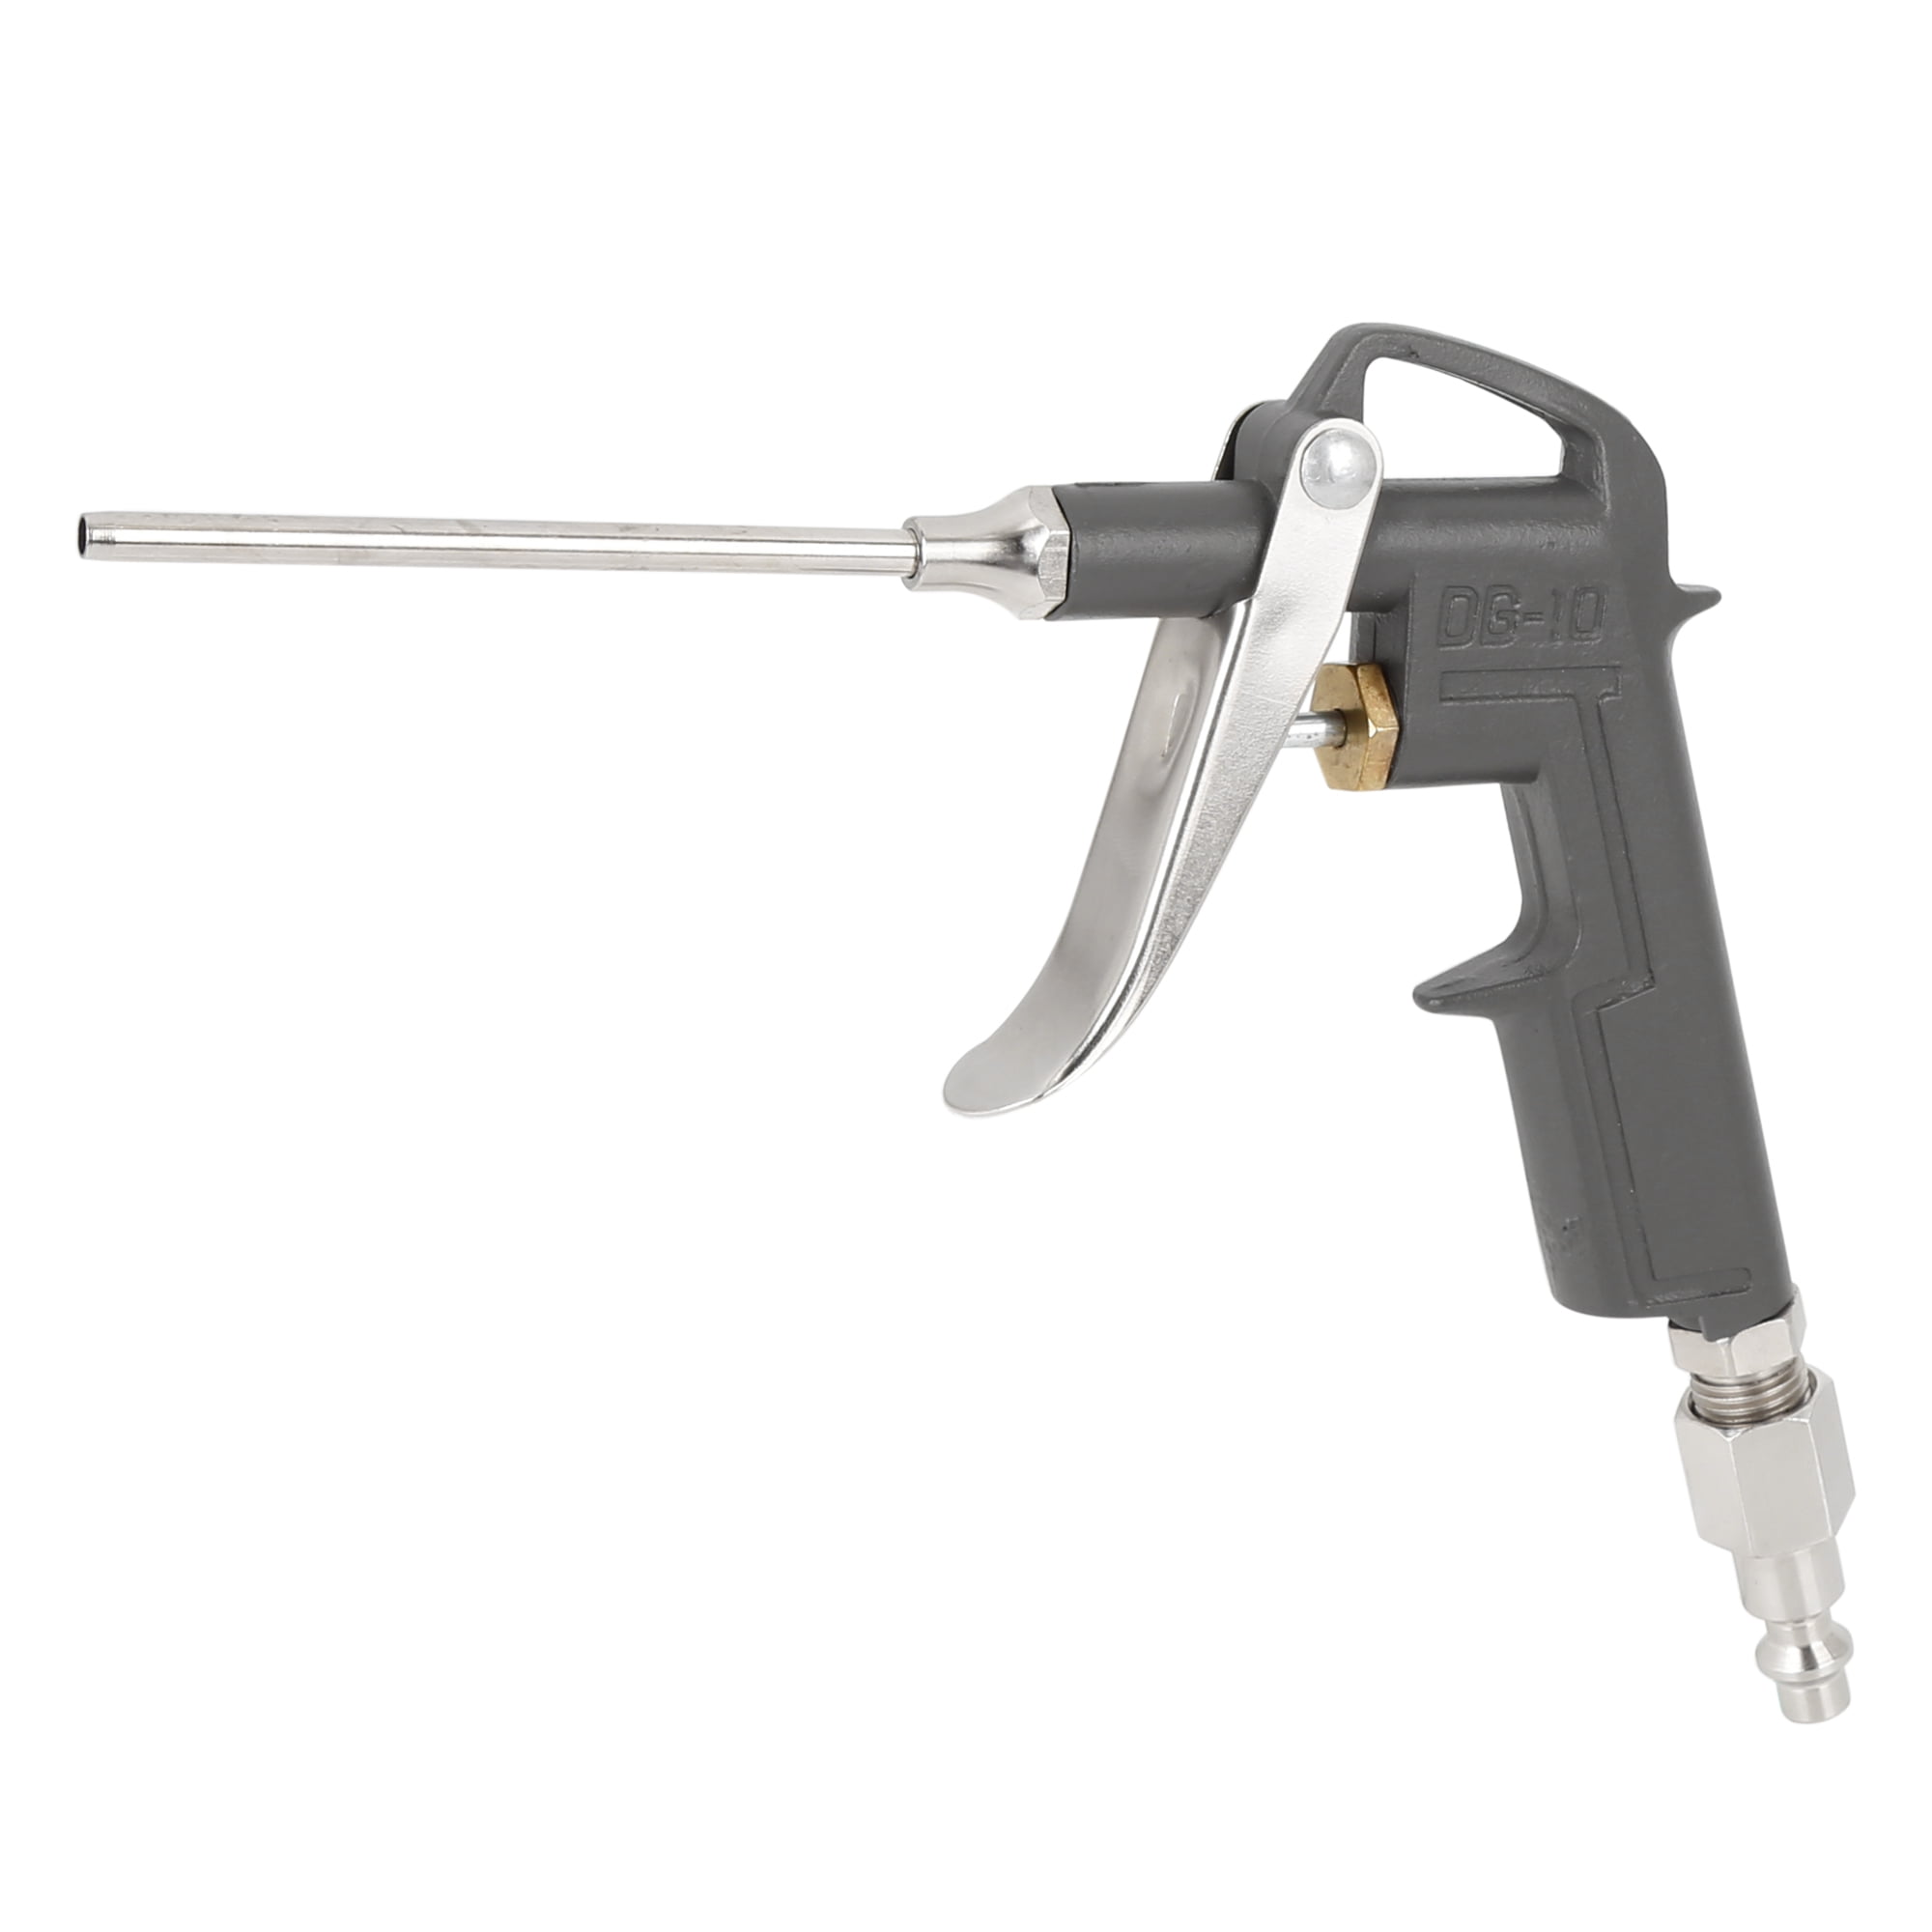 Compressor Air Duster Compressed Air Nozzle Blow Gun Kit Blower Tools Metal 